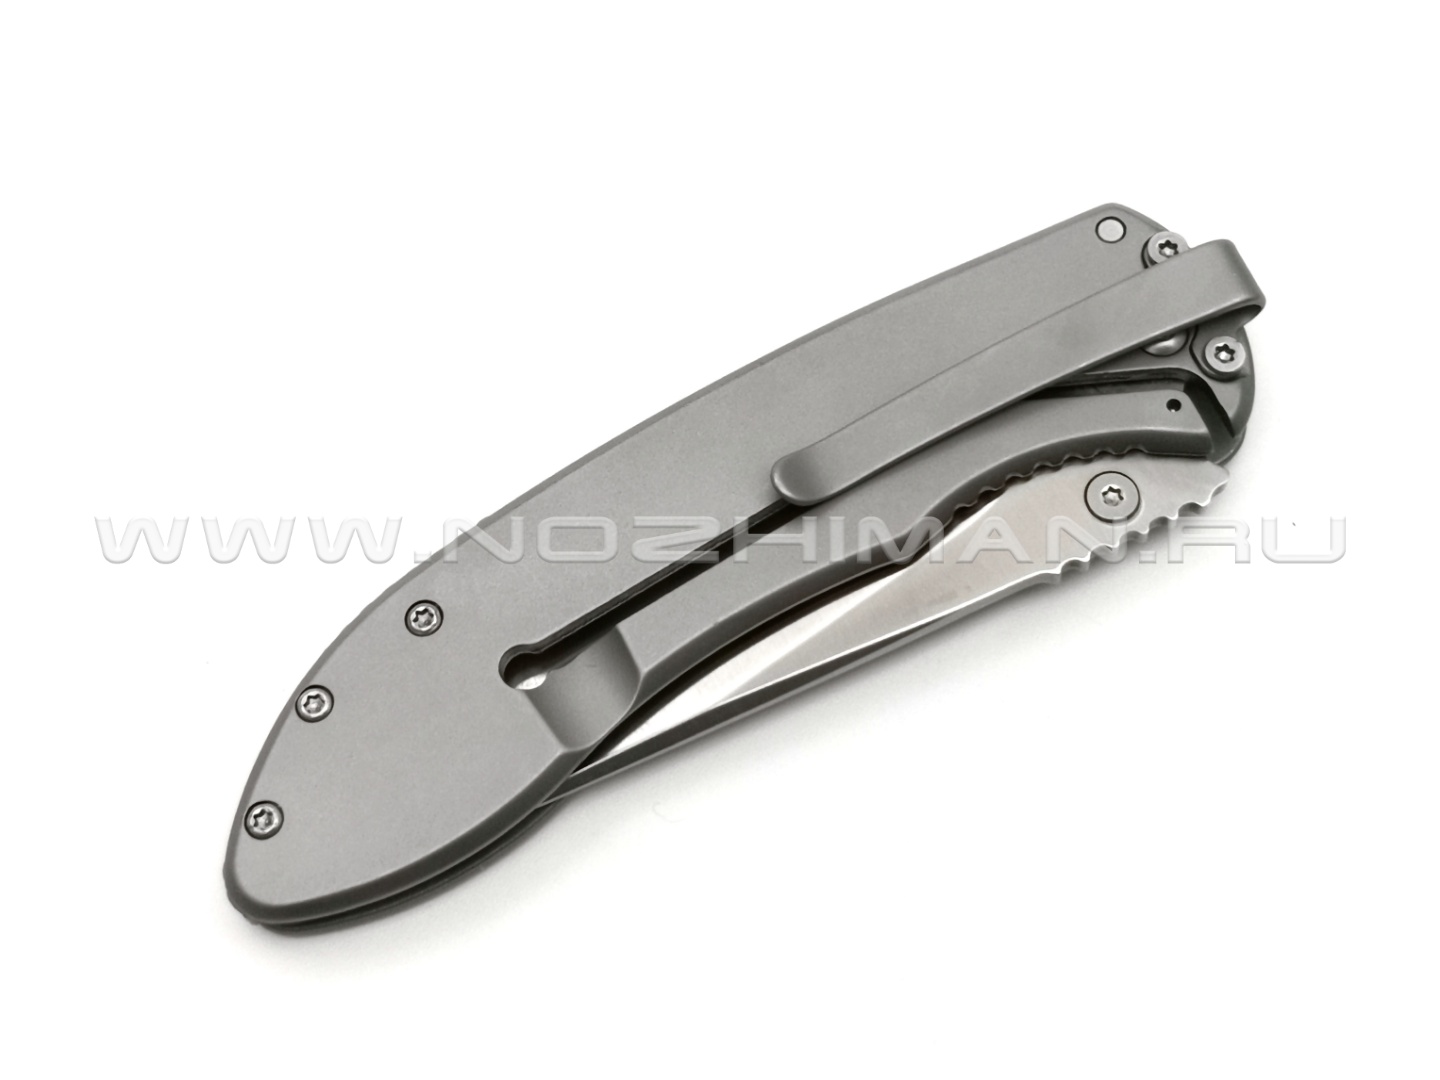 Нож CRKT Ruger Trajectory R2802 сталь 8Cr13MoV, рукоять Stainless steel